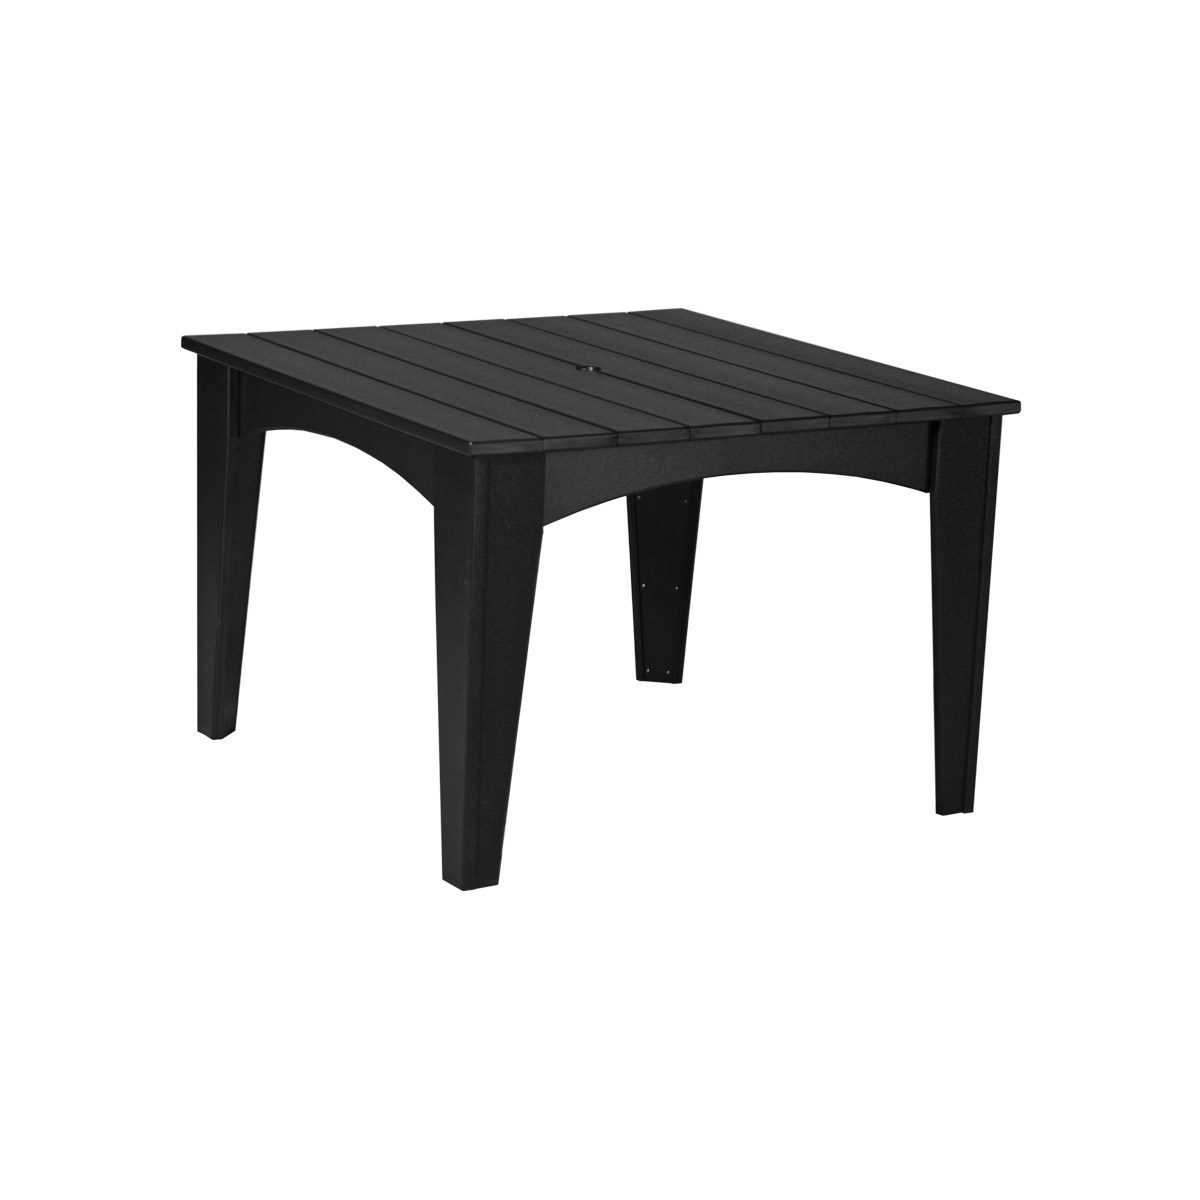 Island Square Table - Black